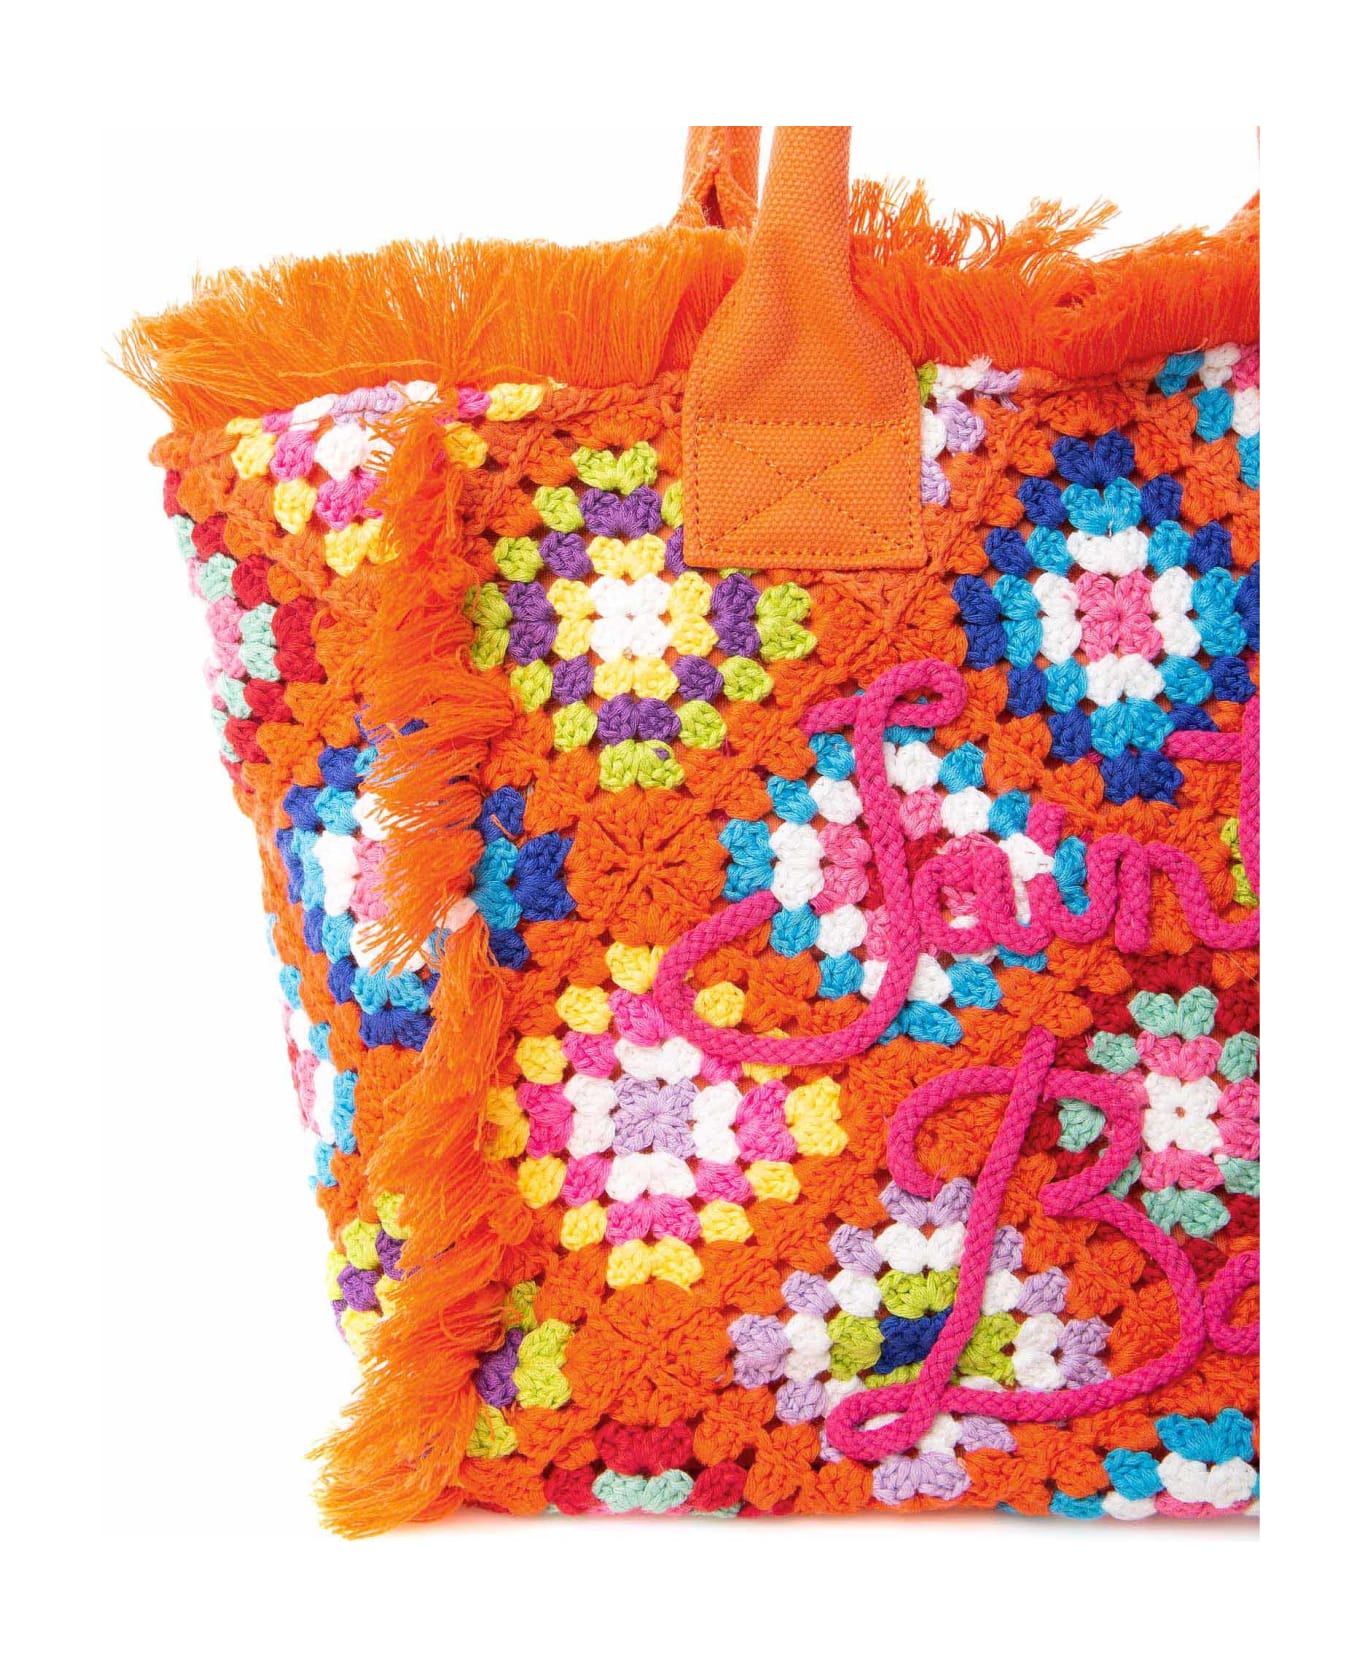 MC2 Saint Barth Vanity Crochet Shoulder Bag With Pattern - ORANGE